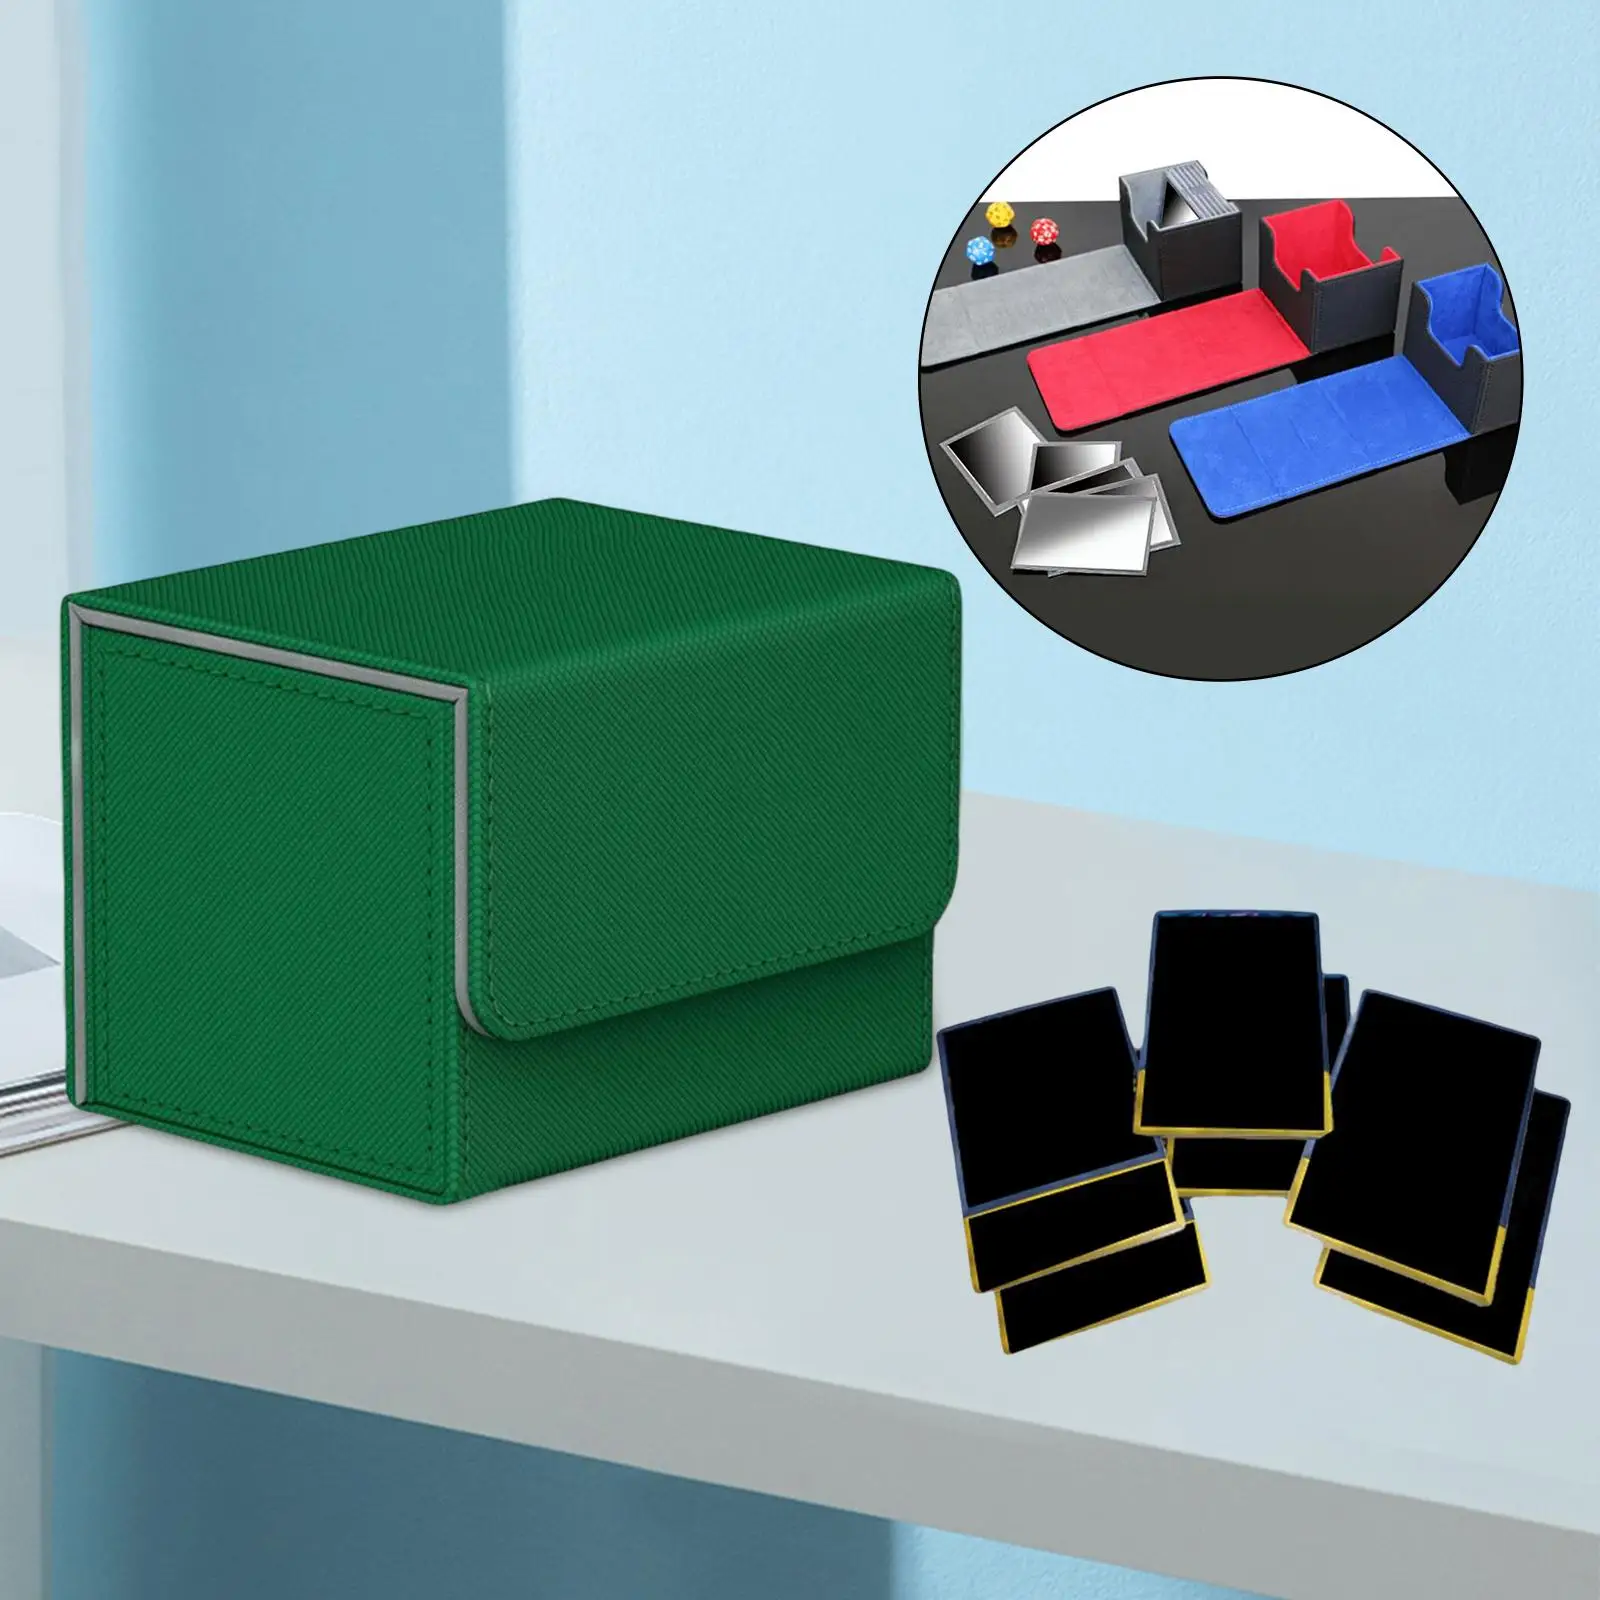 Premium Trading Card Deck Box Organizer Holder Storage Case Gathering Card Toy Standard Game Card for Cards